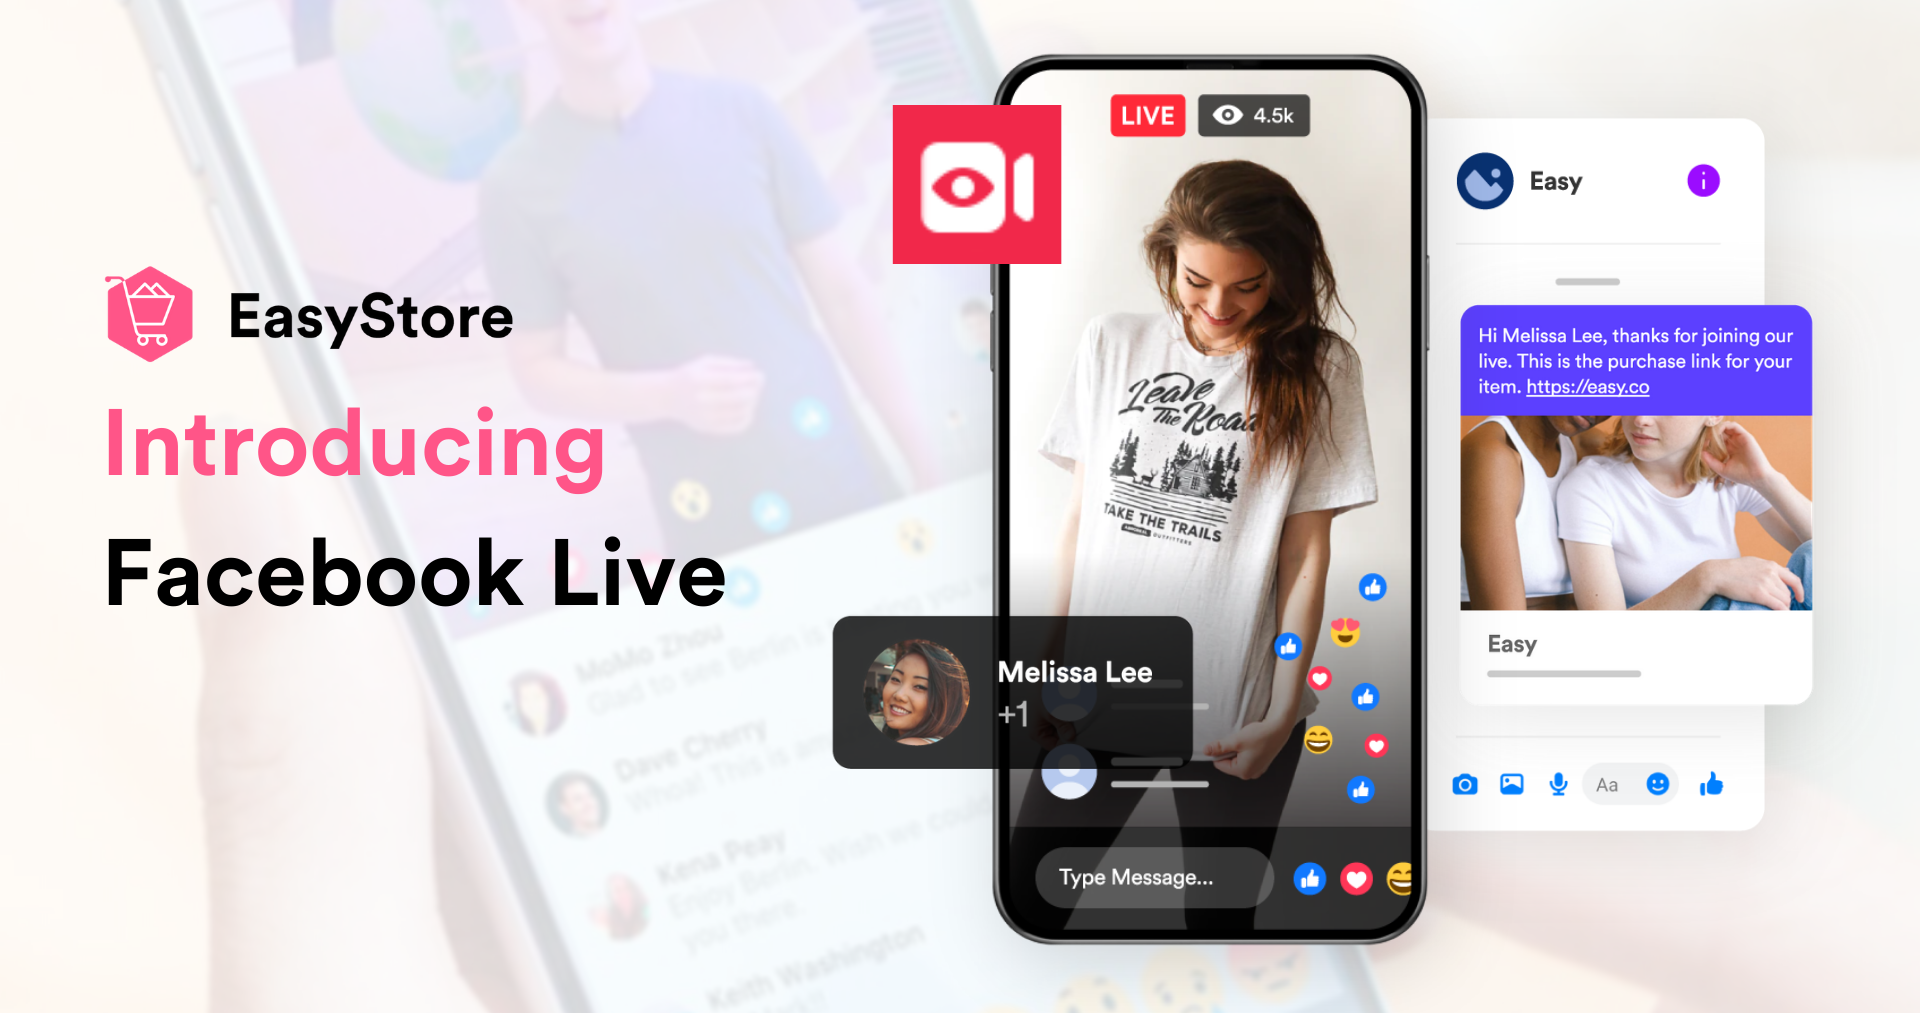 accept-more-orders-via-facebook-live-in-easystore